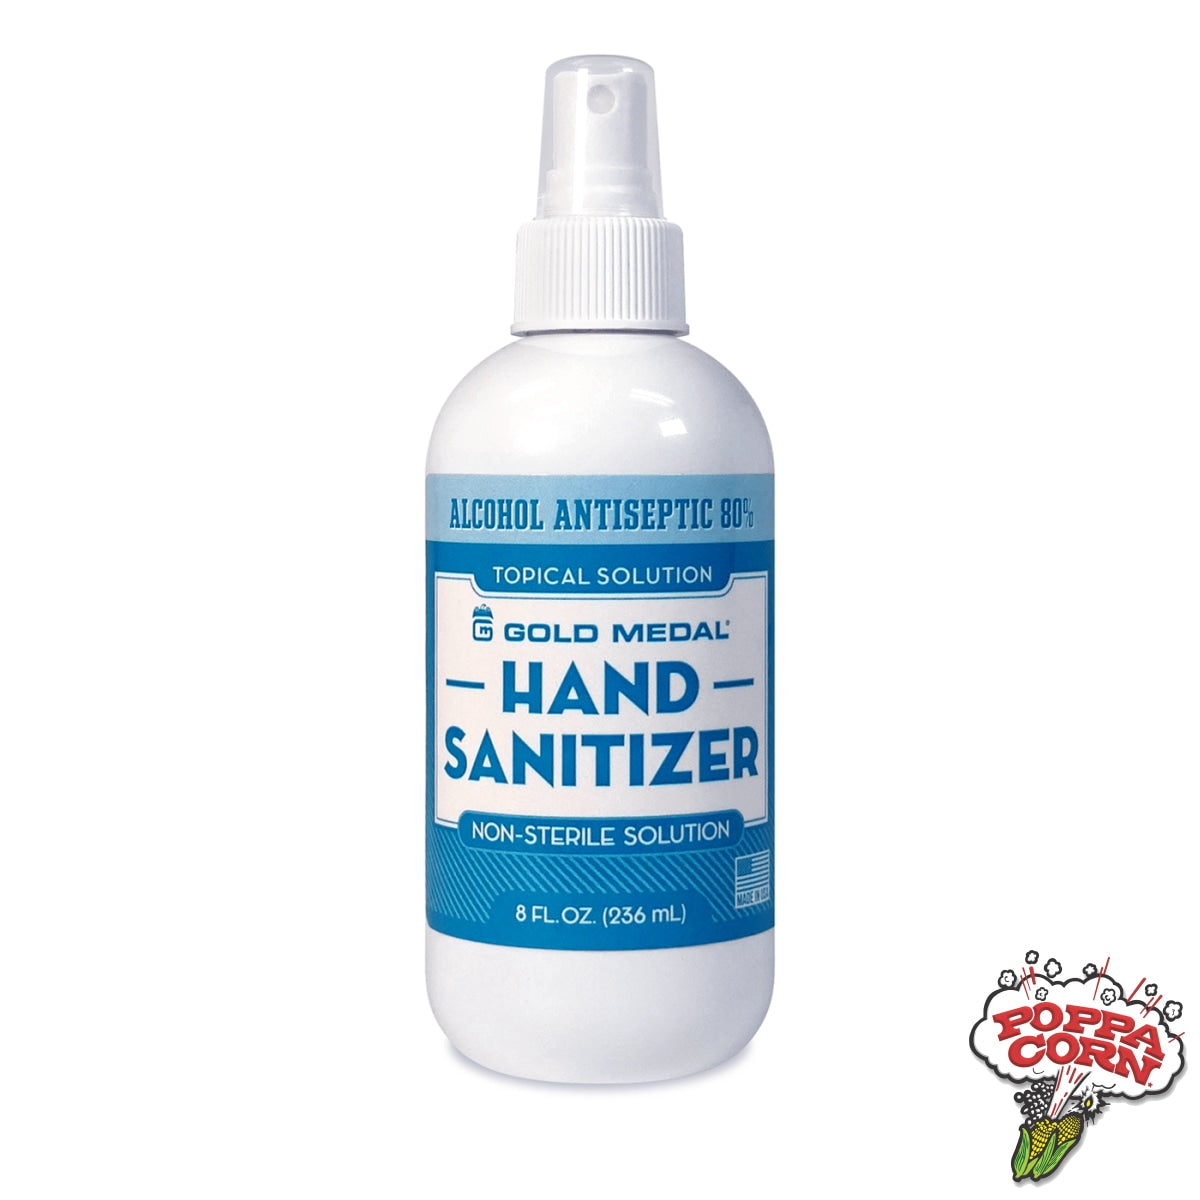 Hand Sanitizer (Alcohol Antiseptic 80%) 8-oz. Spray Bottle - Poppa Corn Corp